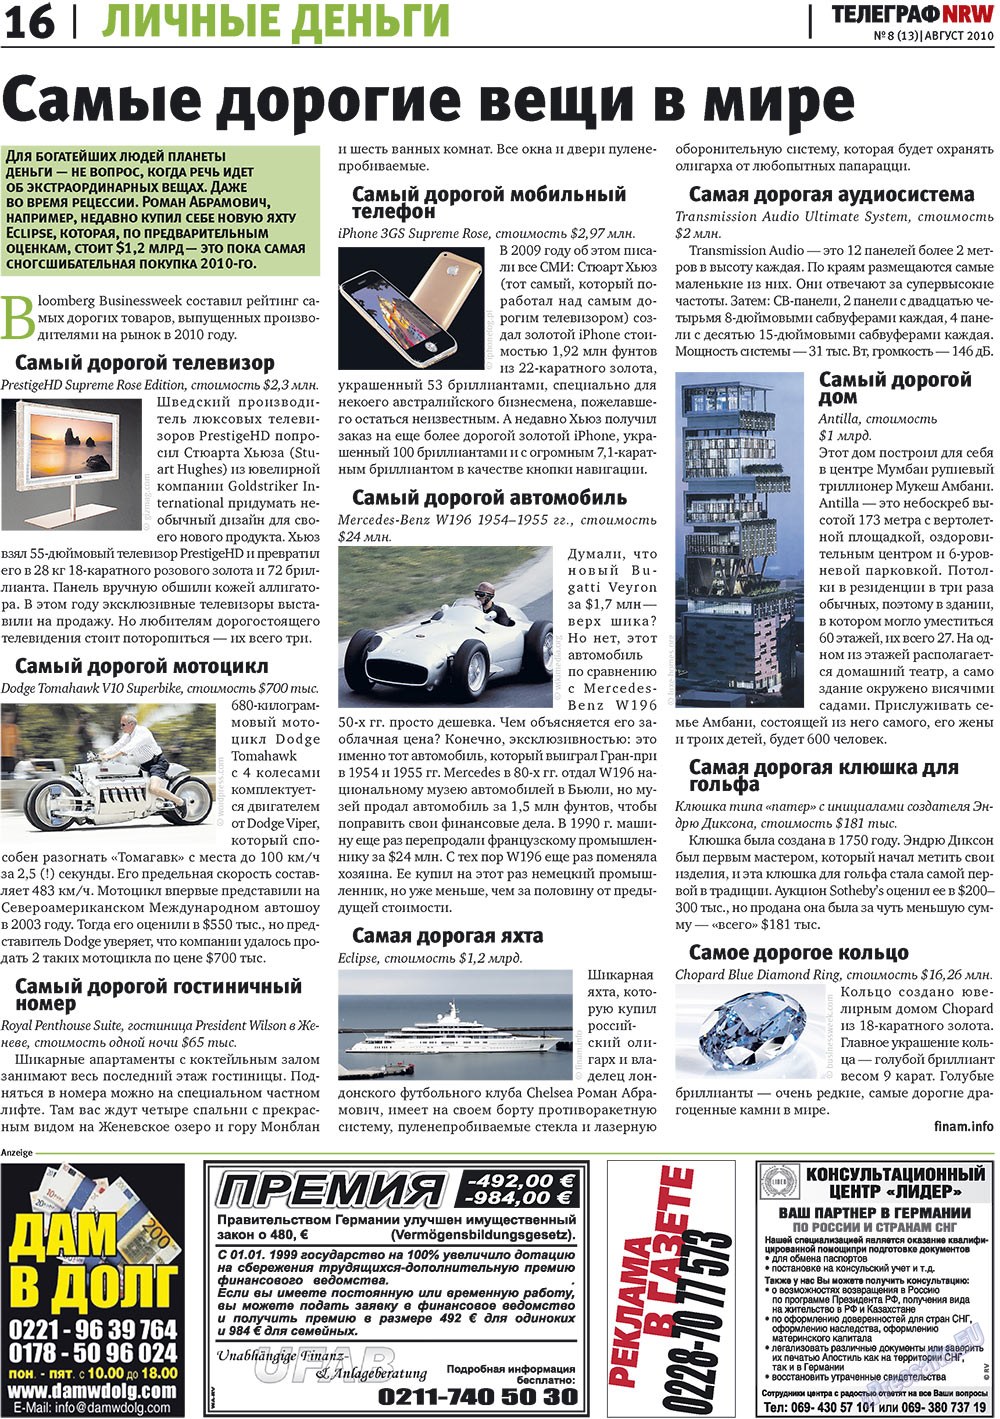 Телеграф NRW, газета. 2010 №8 стр.16